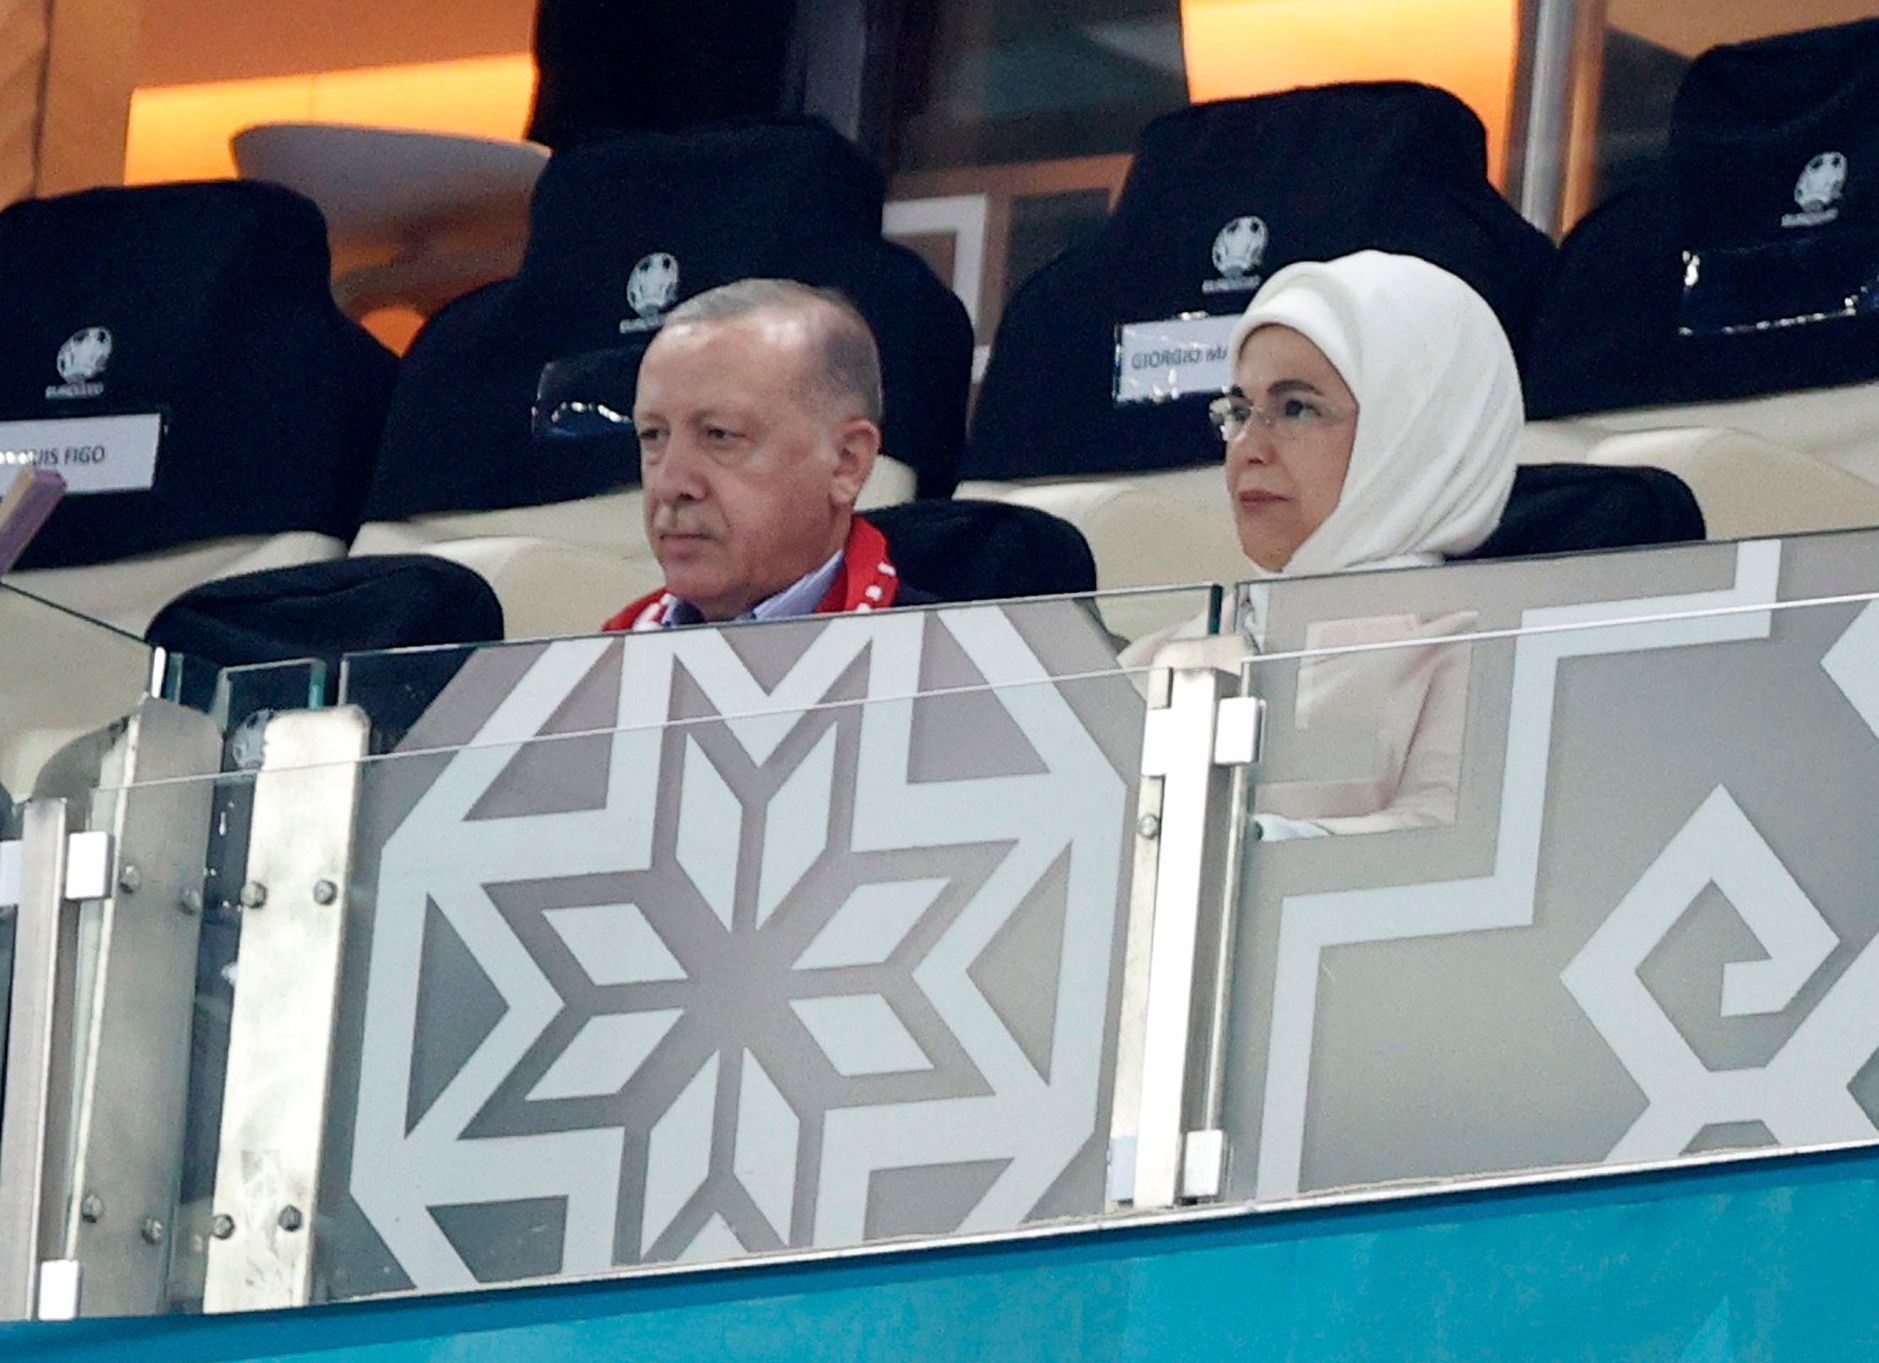 Turecký prezident Recep Tayyip Erdogan v hledišti zázpasu Eura 2020 Turecko - Wales.